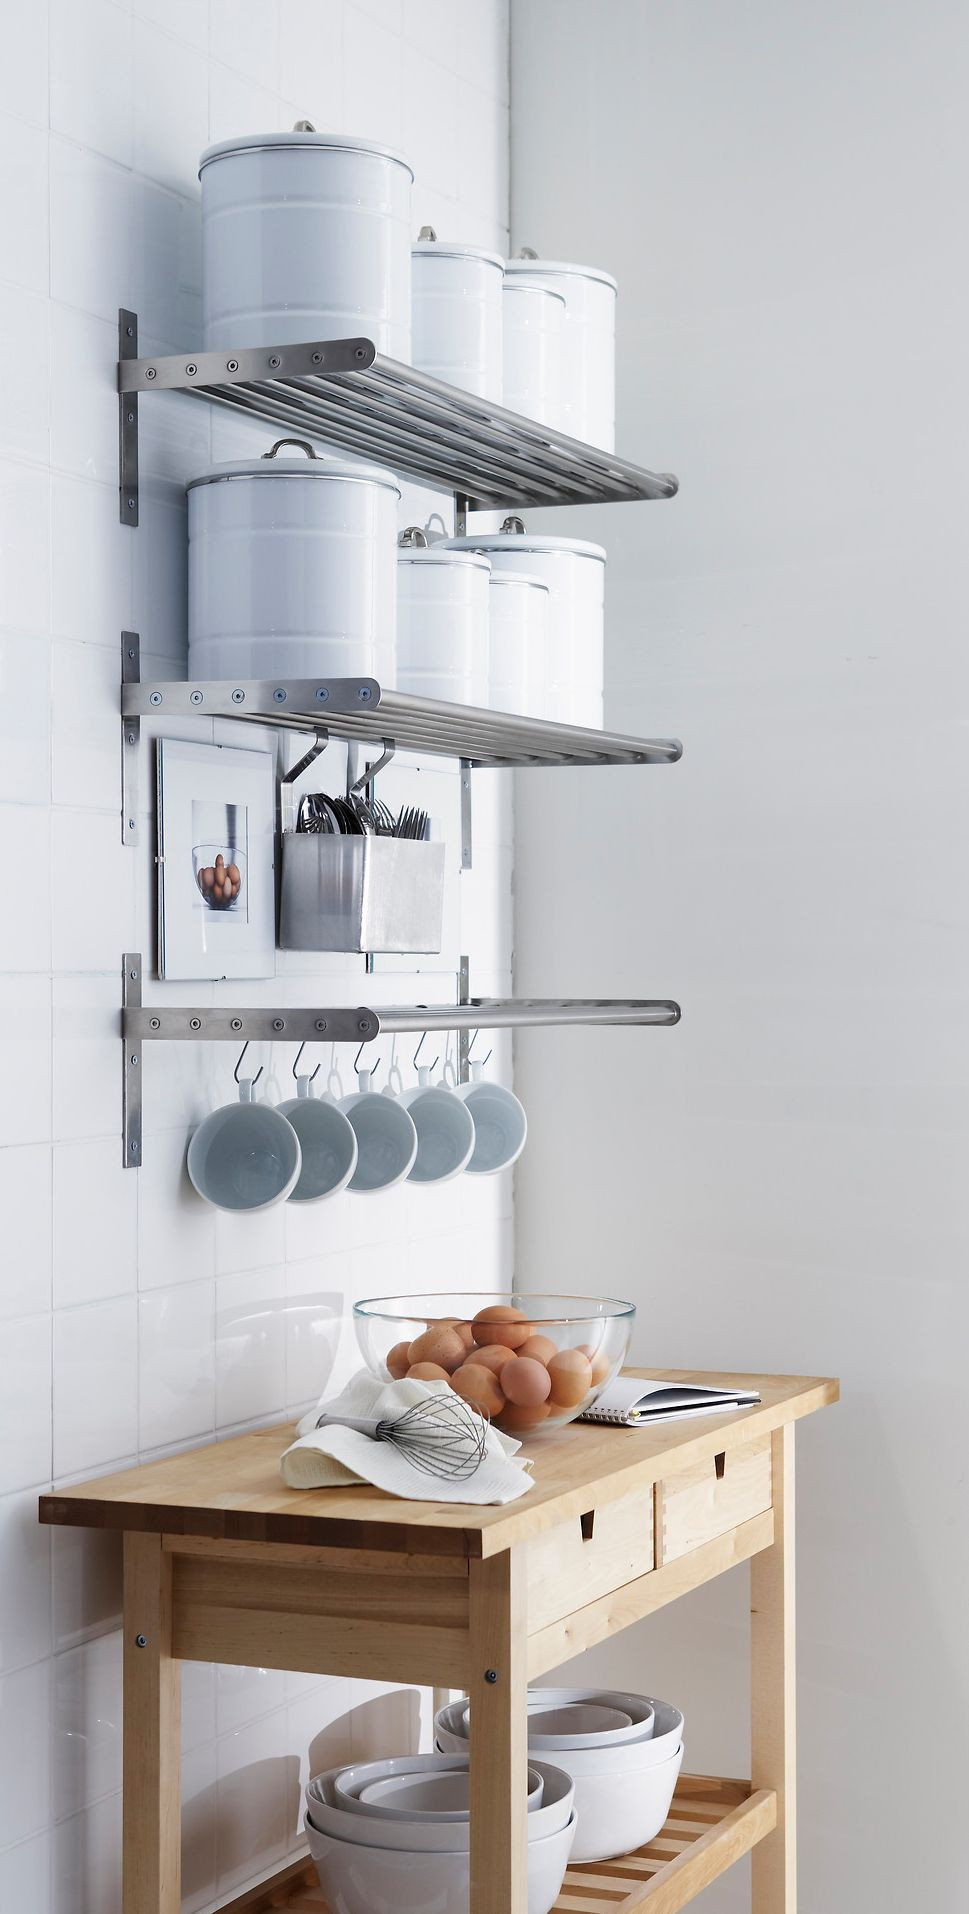 Ikea Kitchen Organizer
 65 Ingenious Kitchen Organization Tips And Storage Ideas